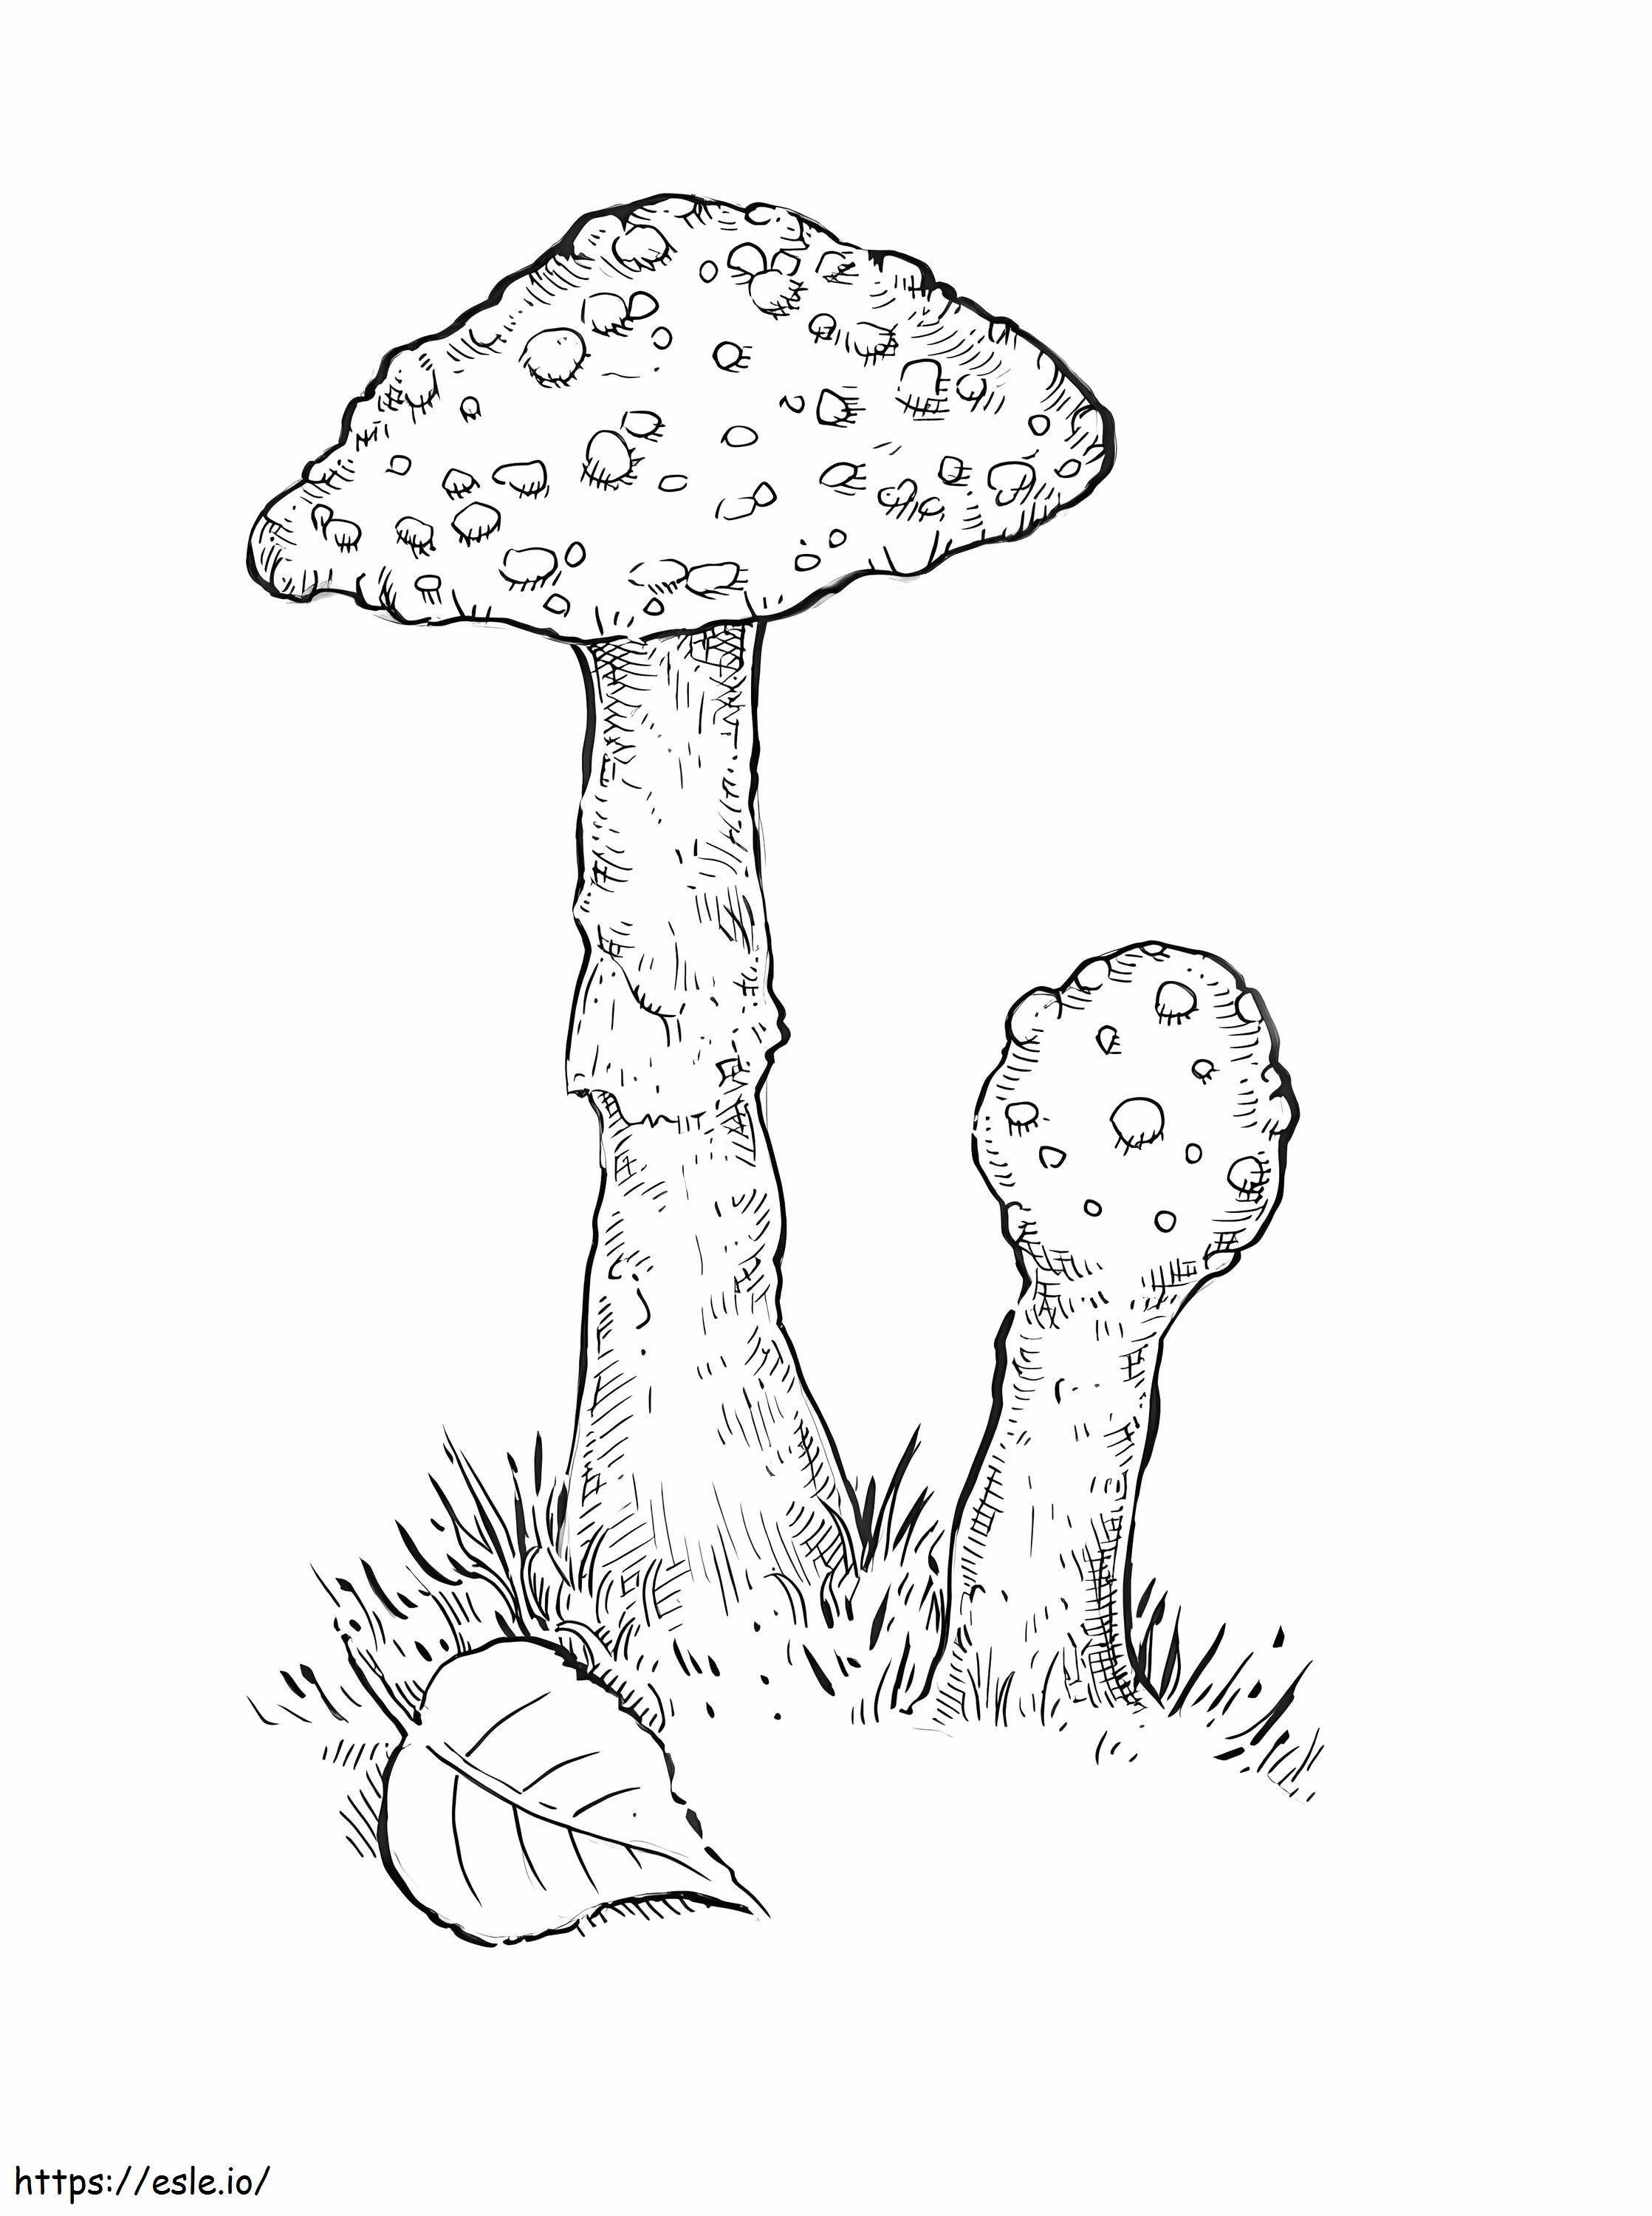 Mushrooms 2 coloring page